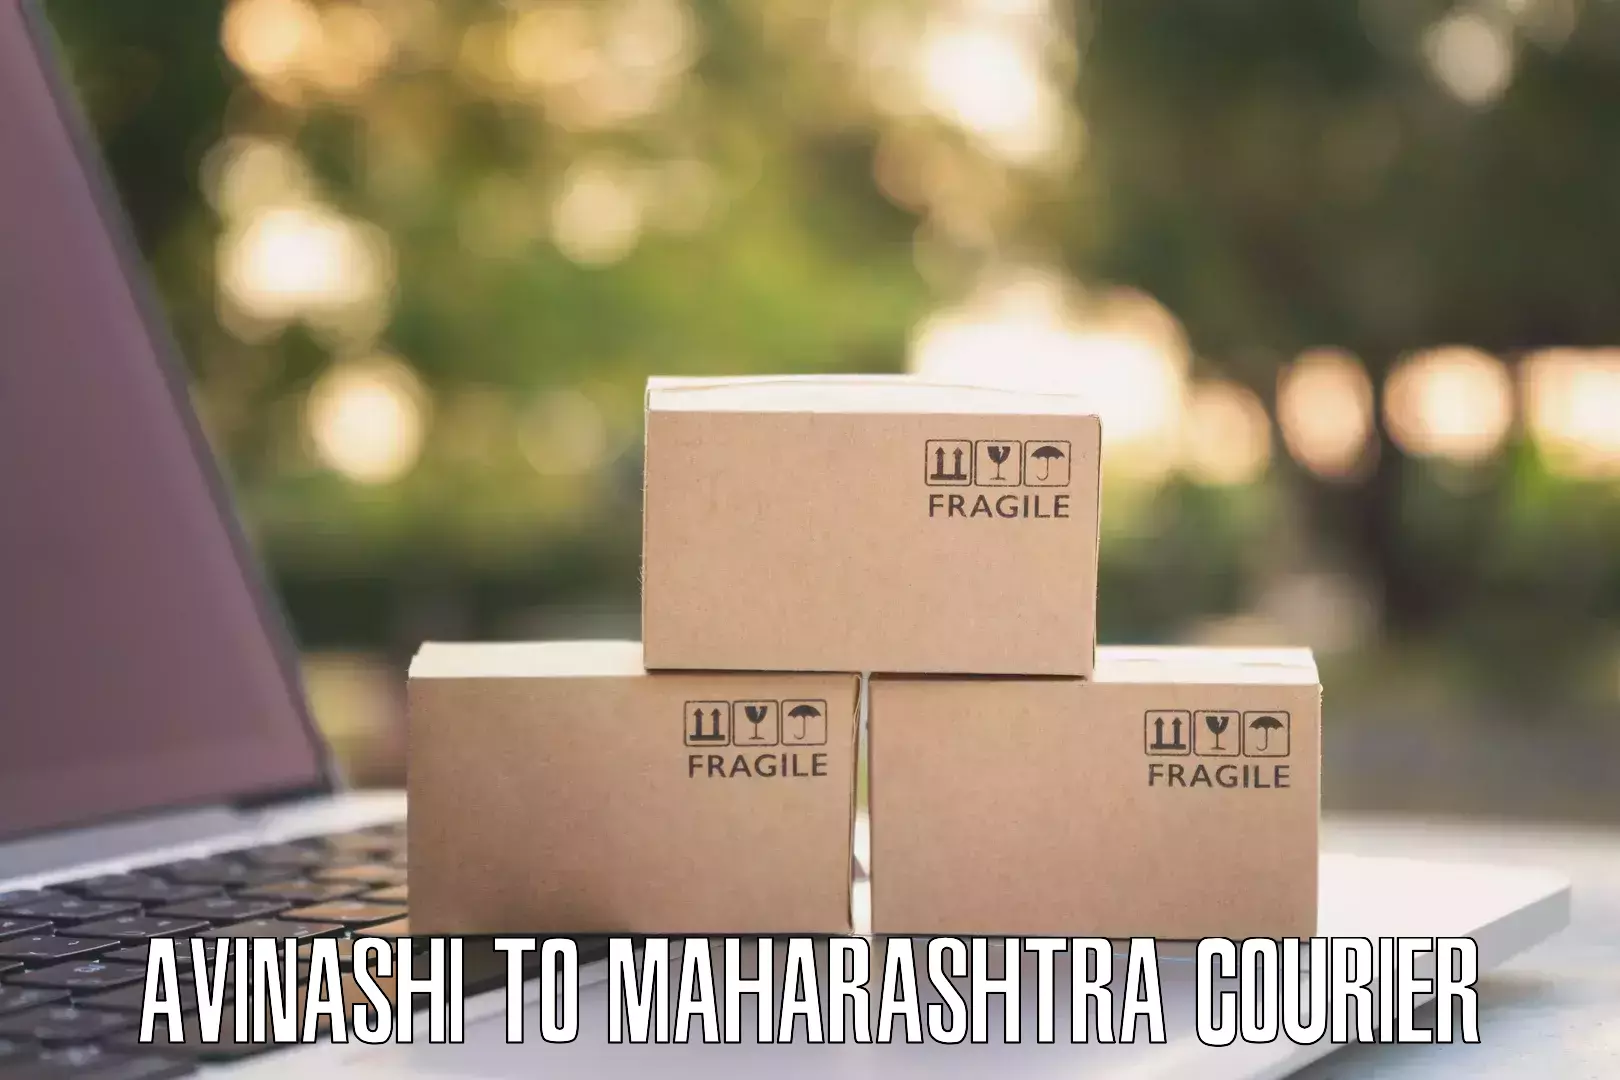 Next-generation courier services Avinashi to Vairag